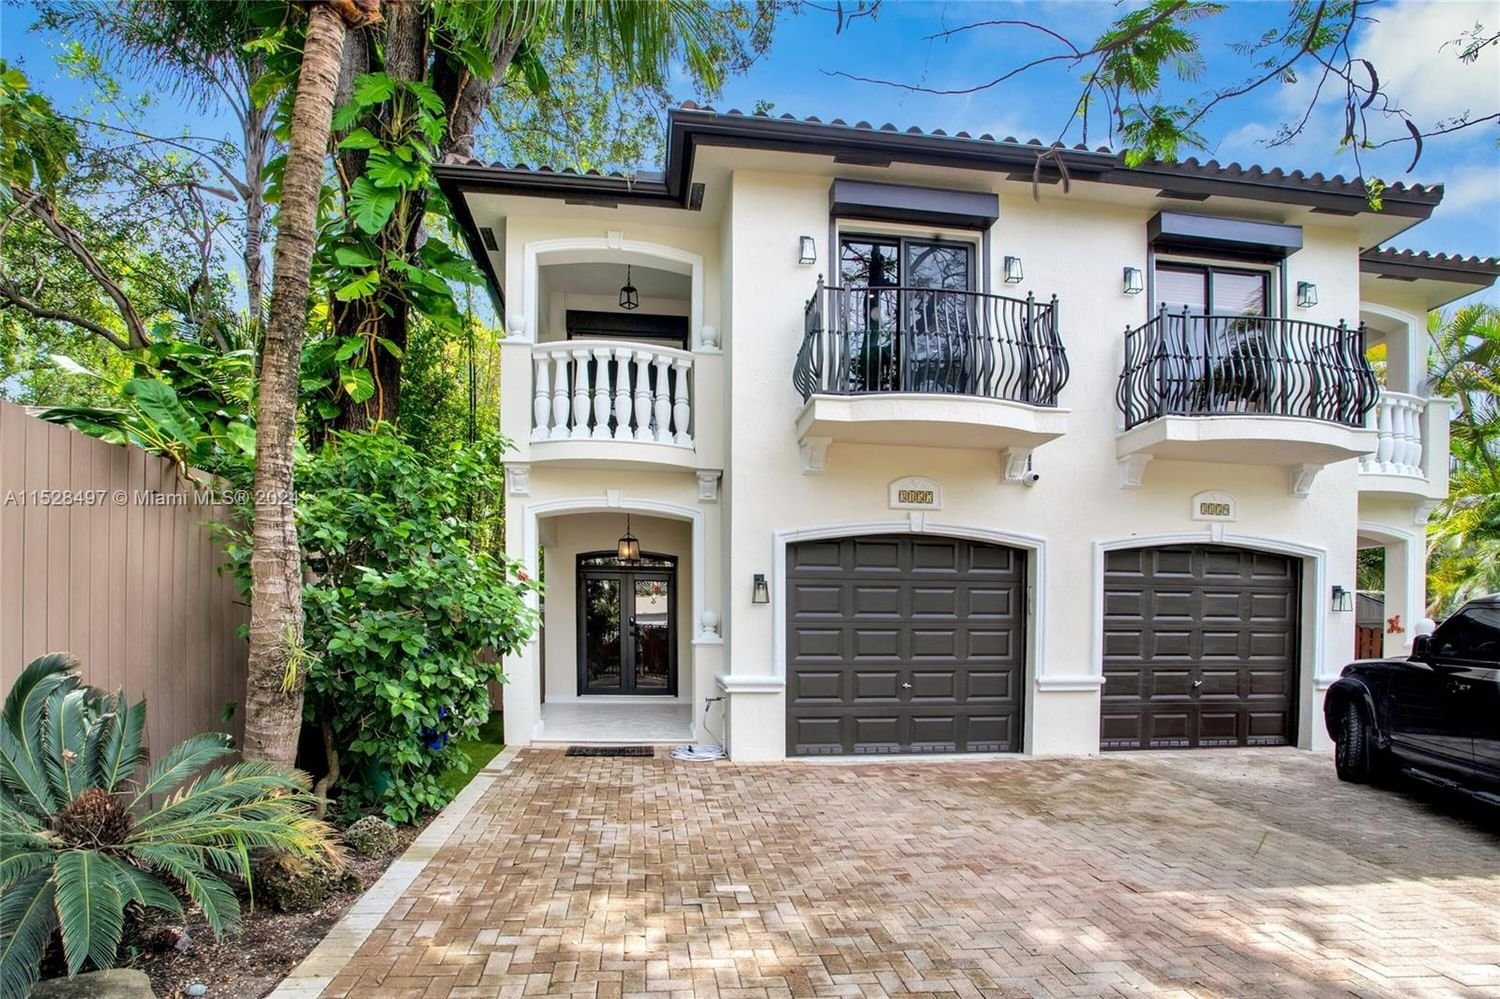 Real estate property located at 3157 Indiana St #3157, Miami-Dade County, INDIANA GROVE CONDO, Miami, FL